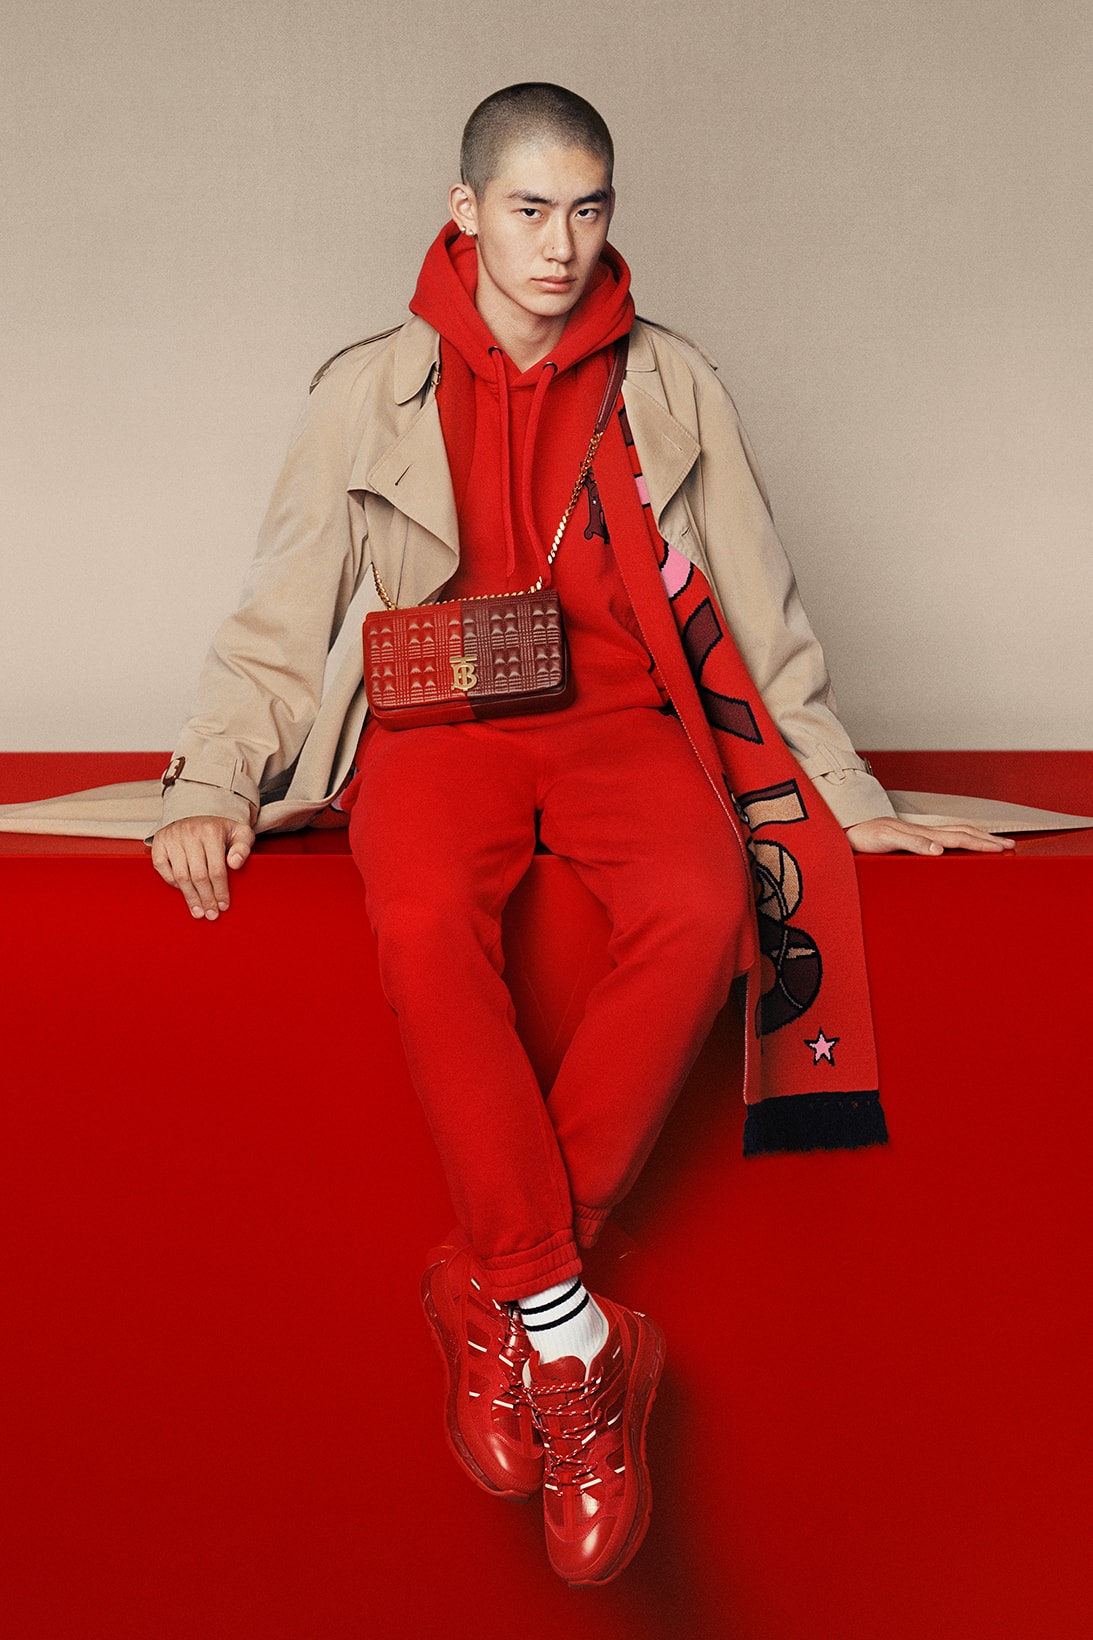 burberry chinese new year 2020 campaign union sneaker lola bag zhou dongyu liang jiyuan jackets scarf blazer red jewelry lola bag